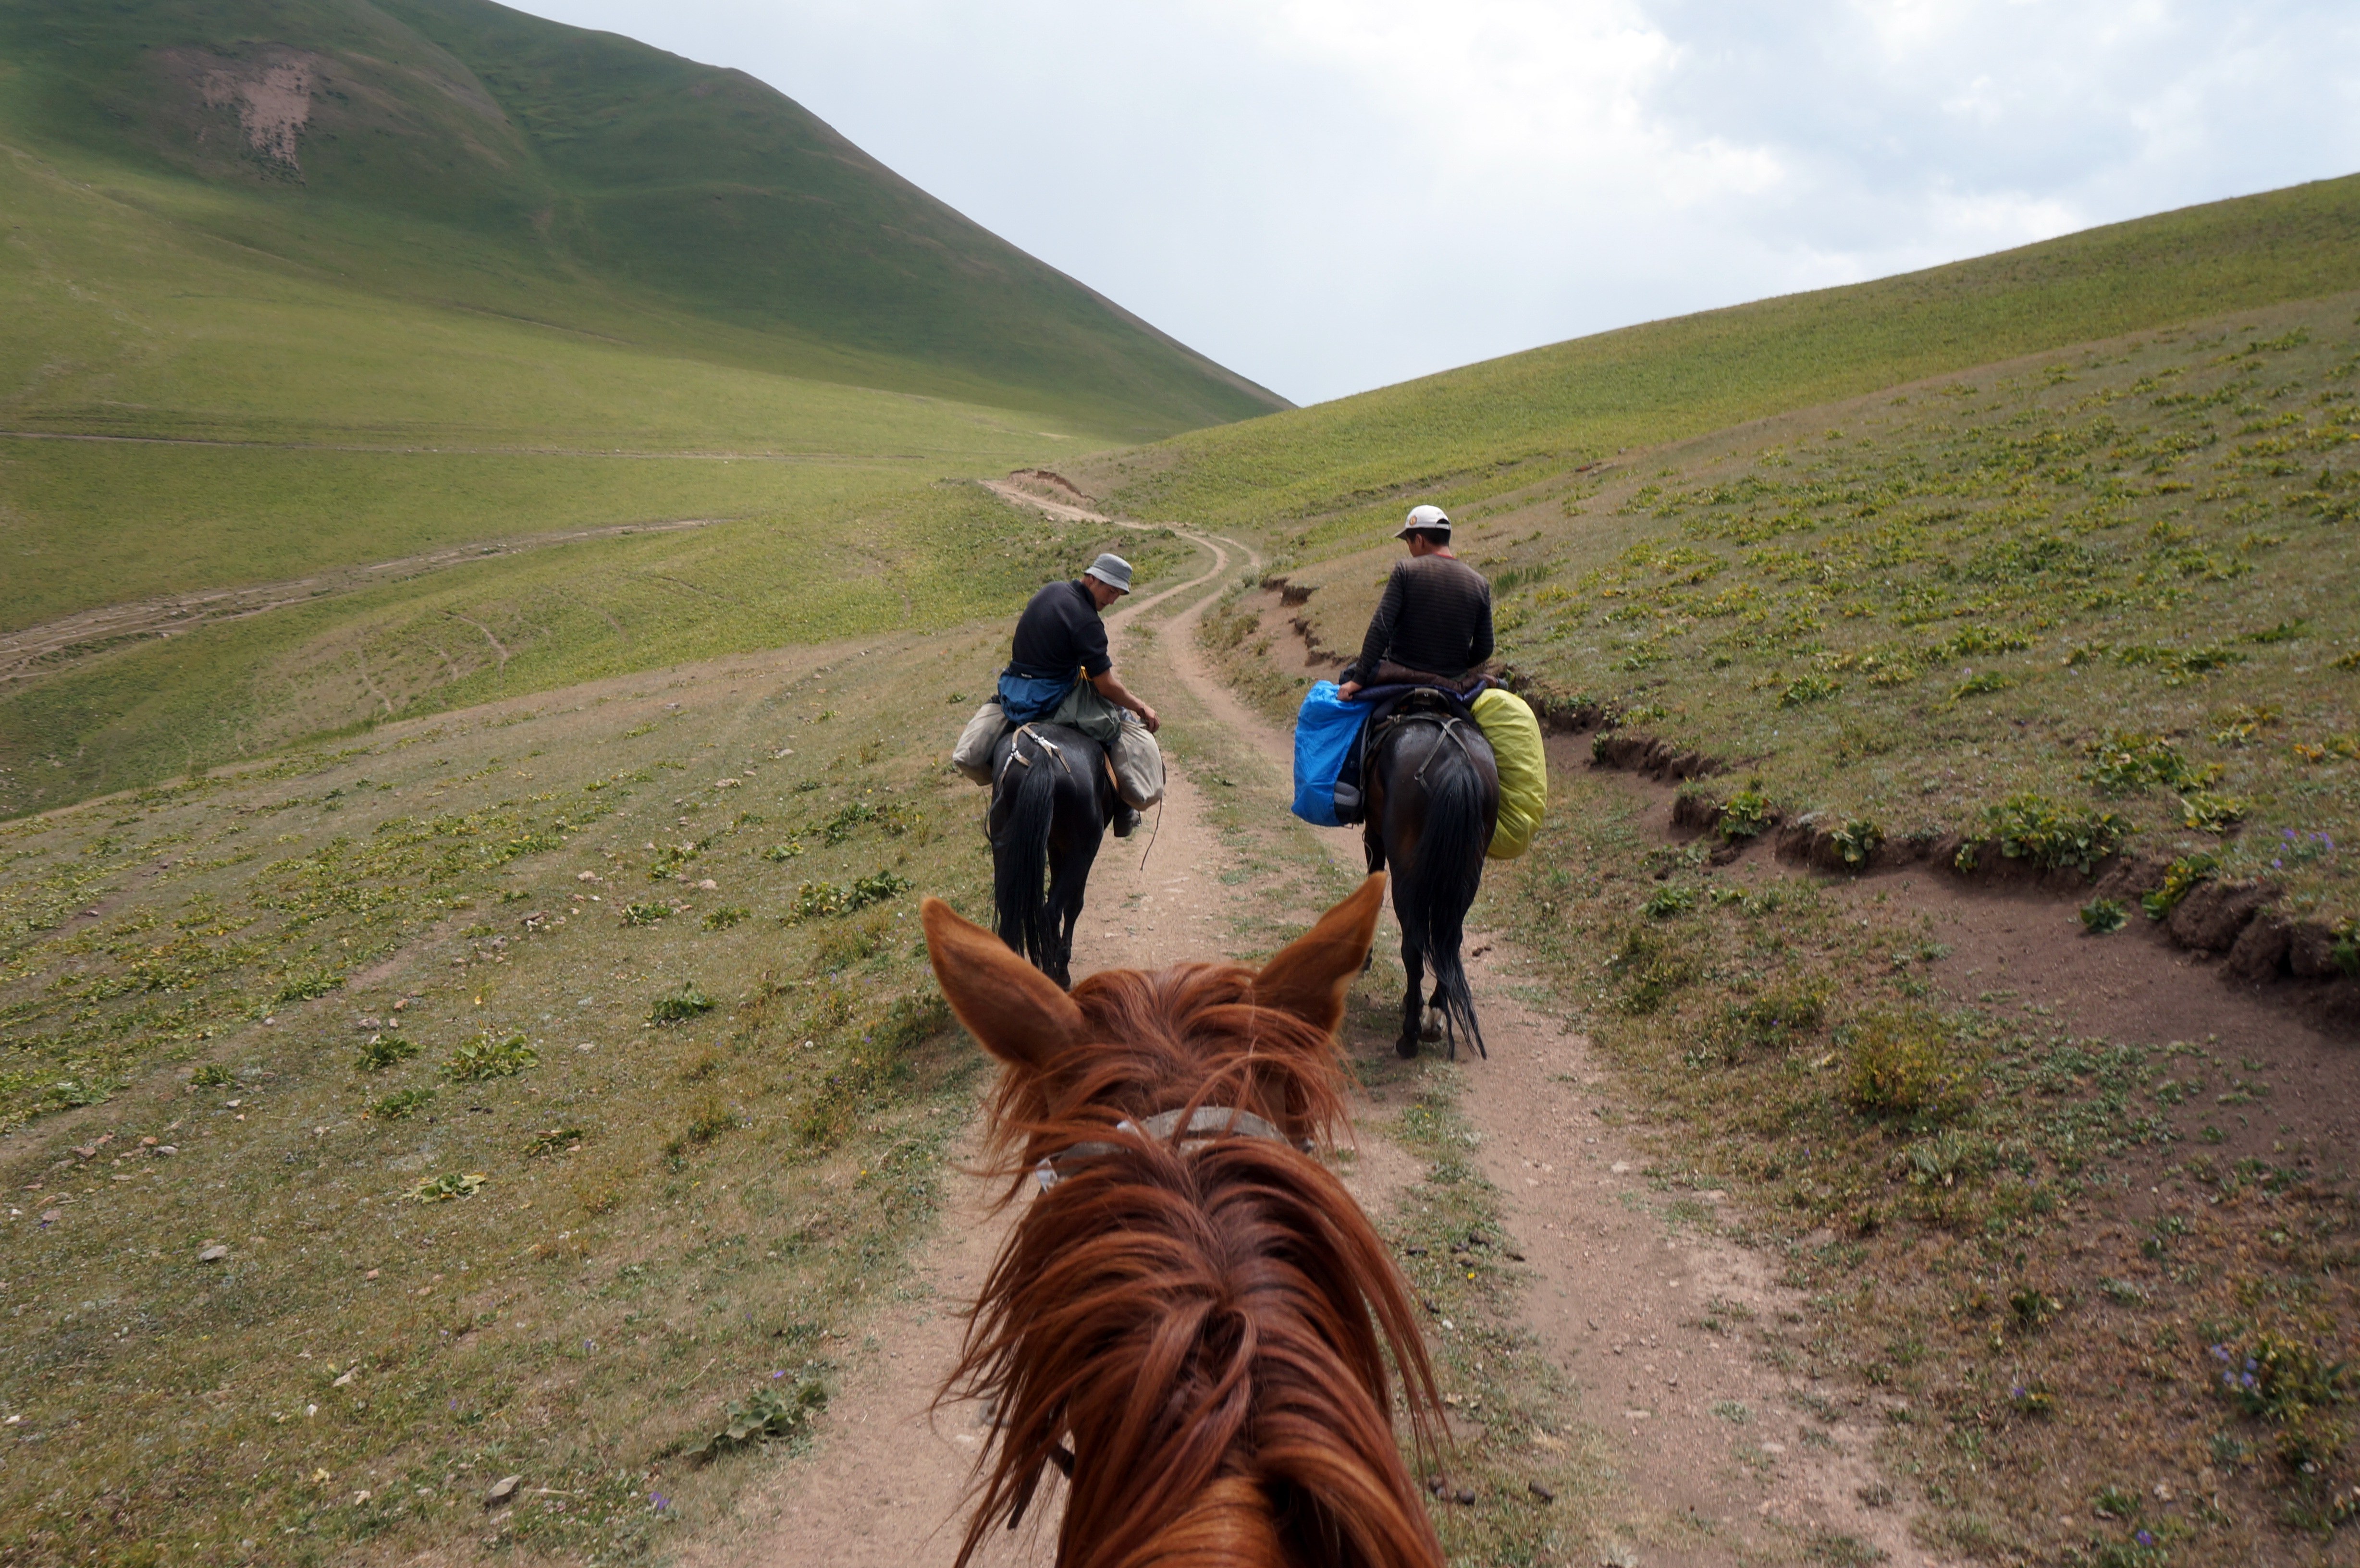 Unterwegs in den Weiten Kirgistans